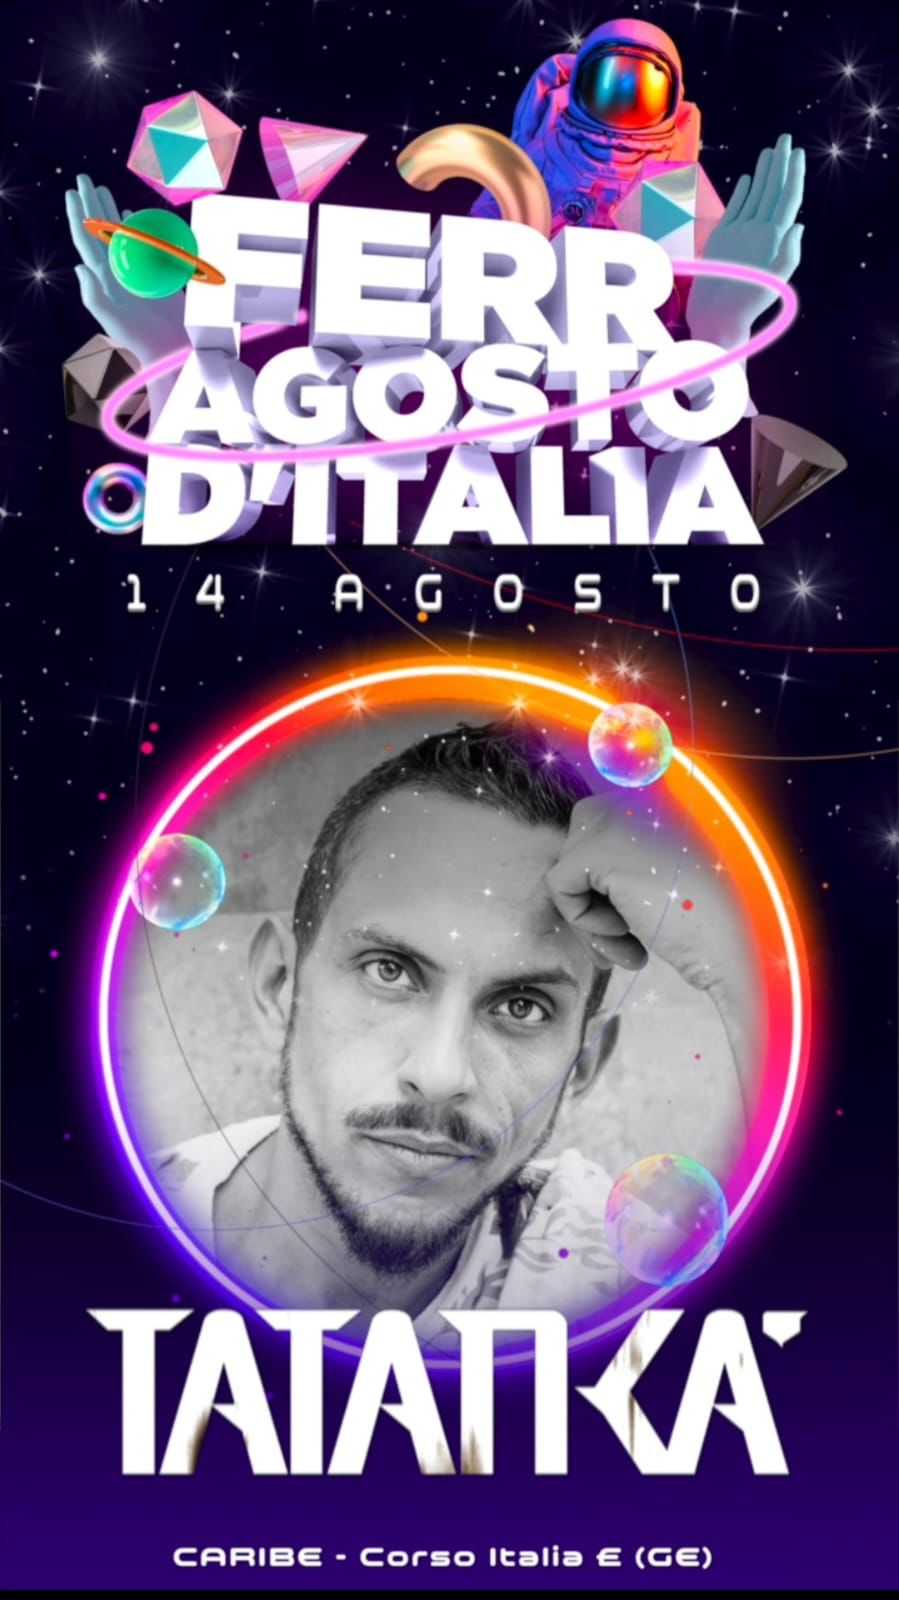 Domenica 14 Agosto DJ TATANKA @ FERRAGOSTO D'ITALIA @ CARIBE ( GE)